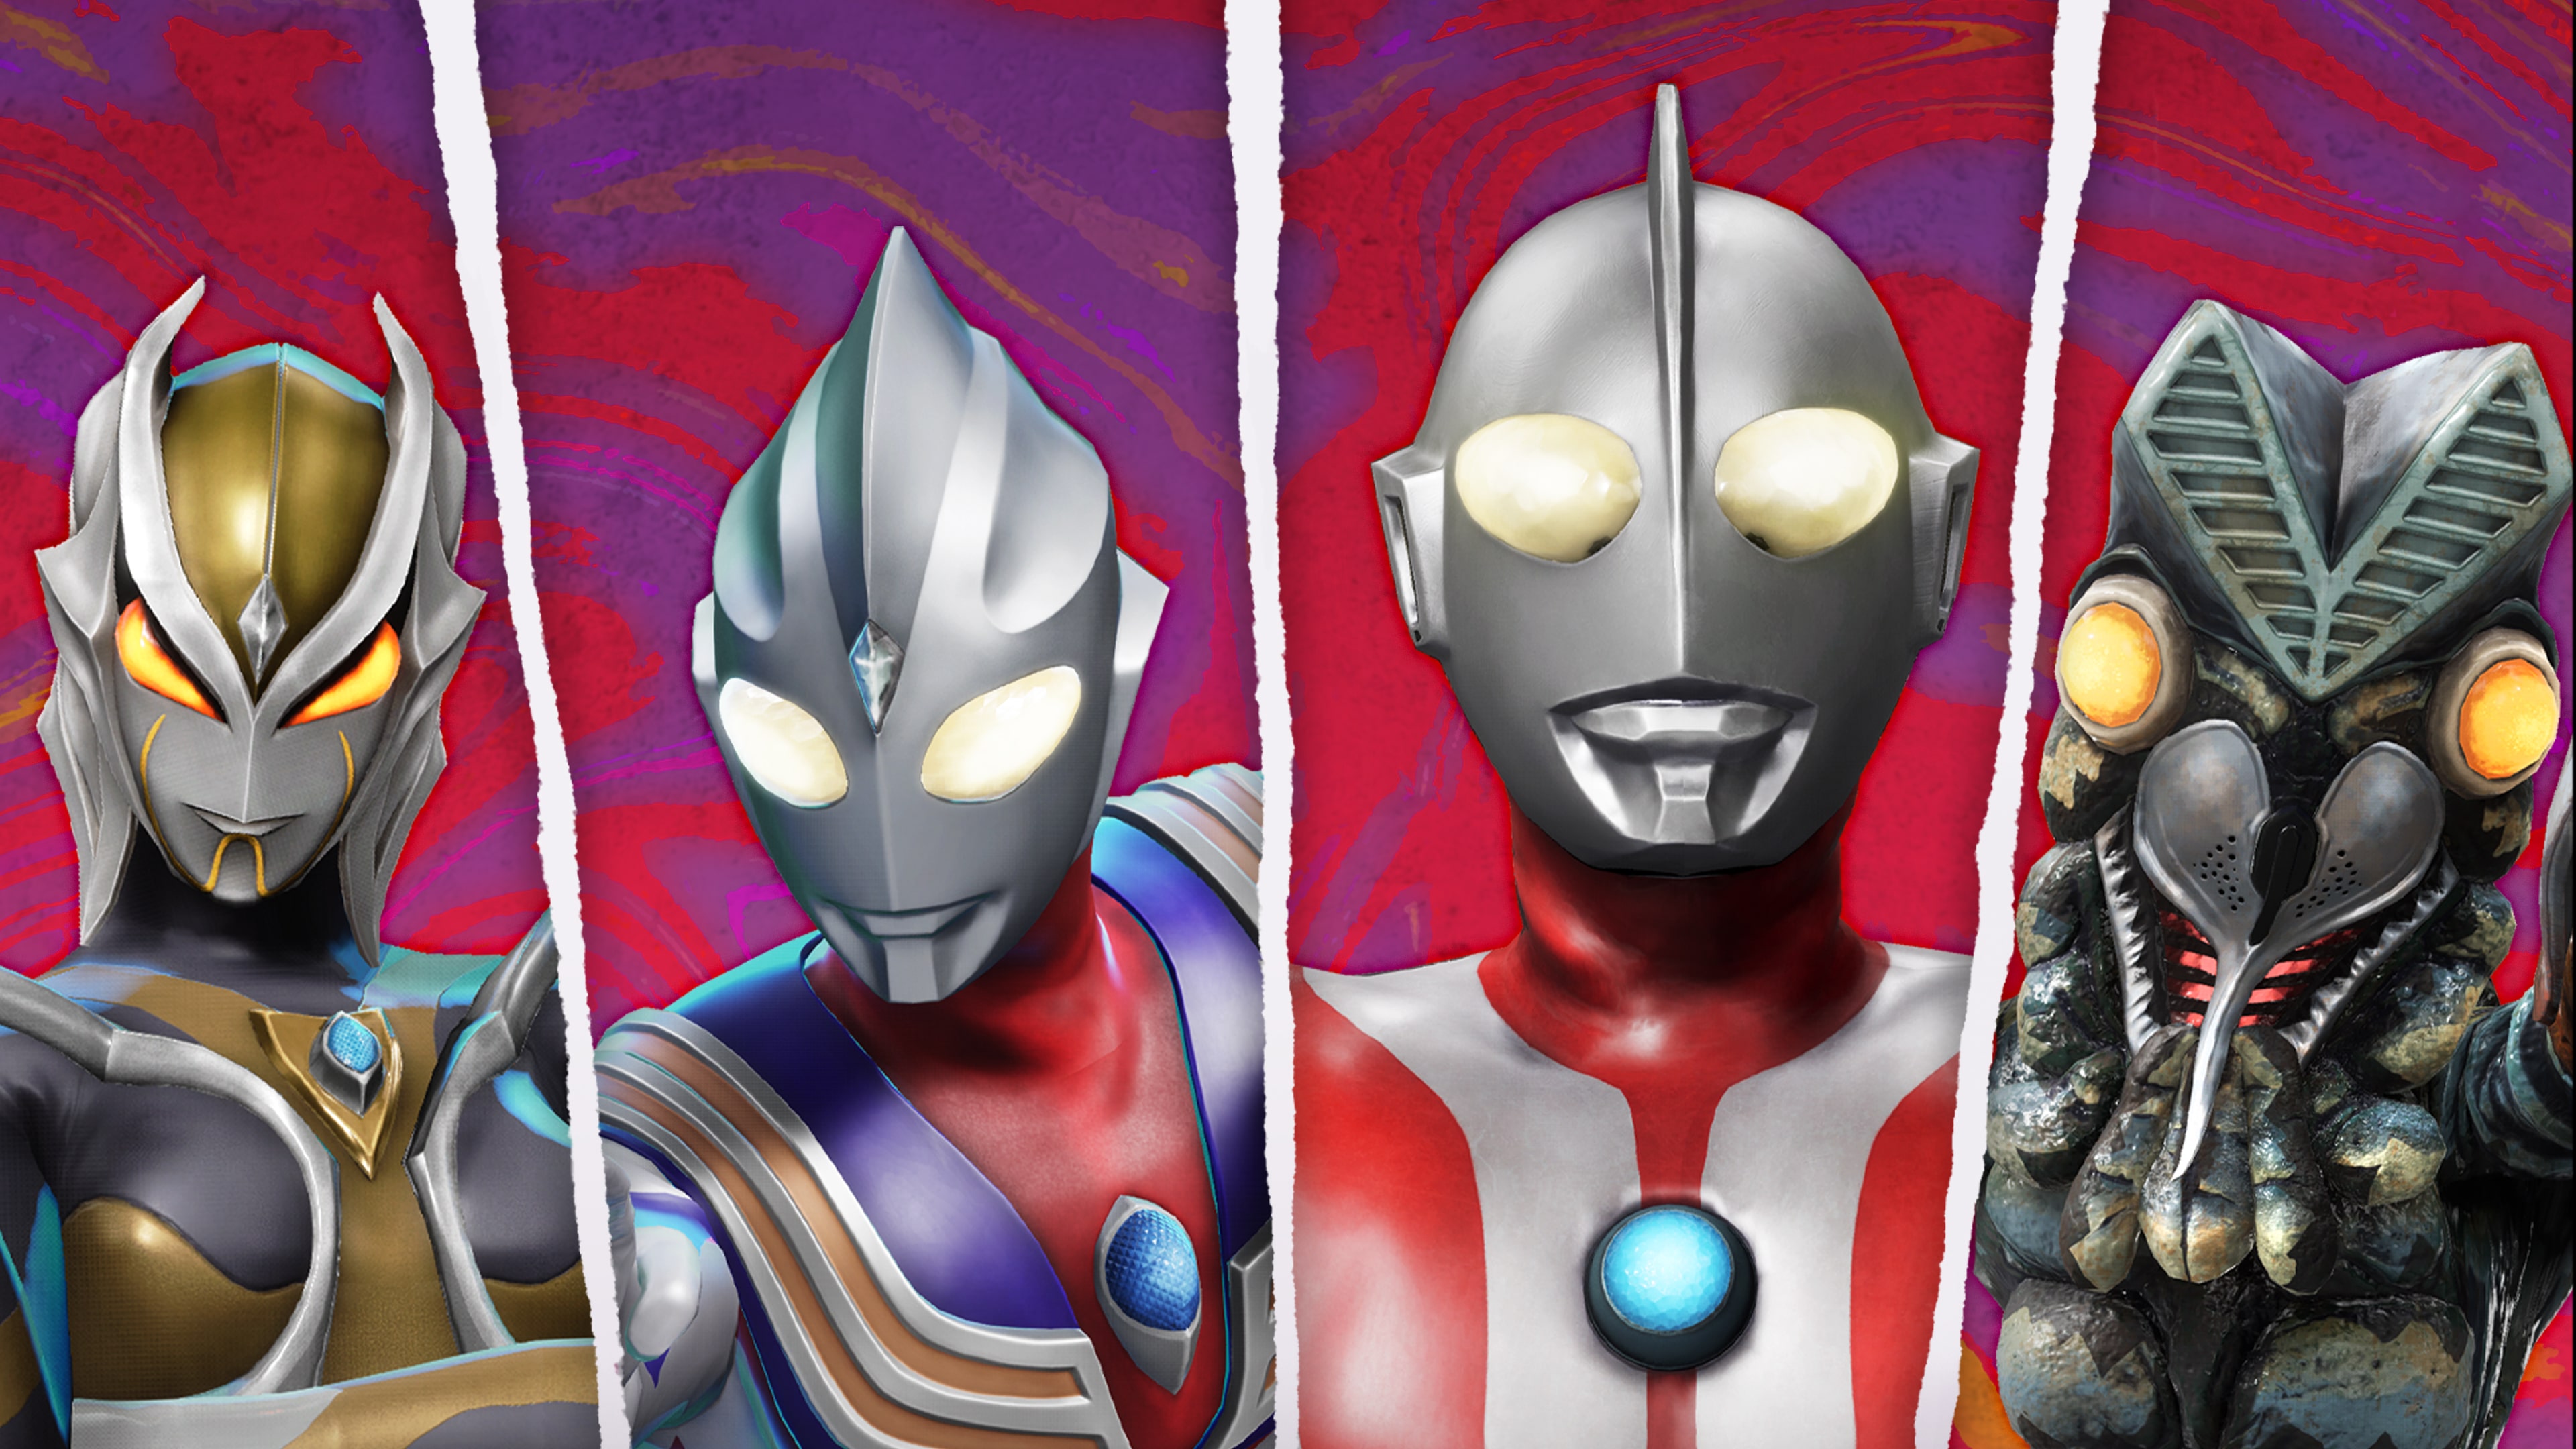 GigaBash - Ultraman 4 Characters Pack DLC